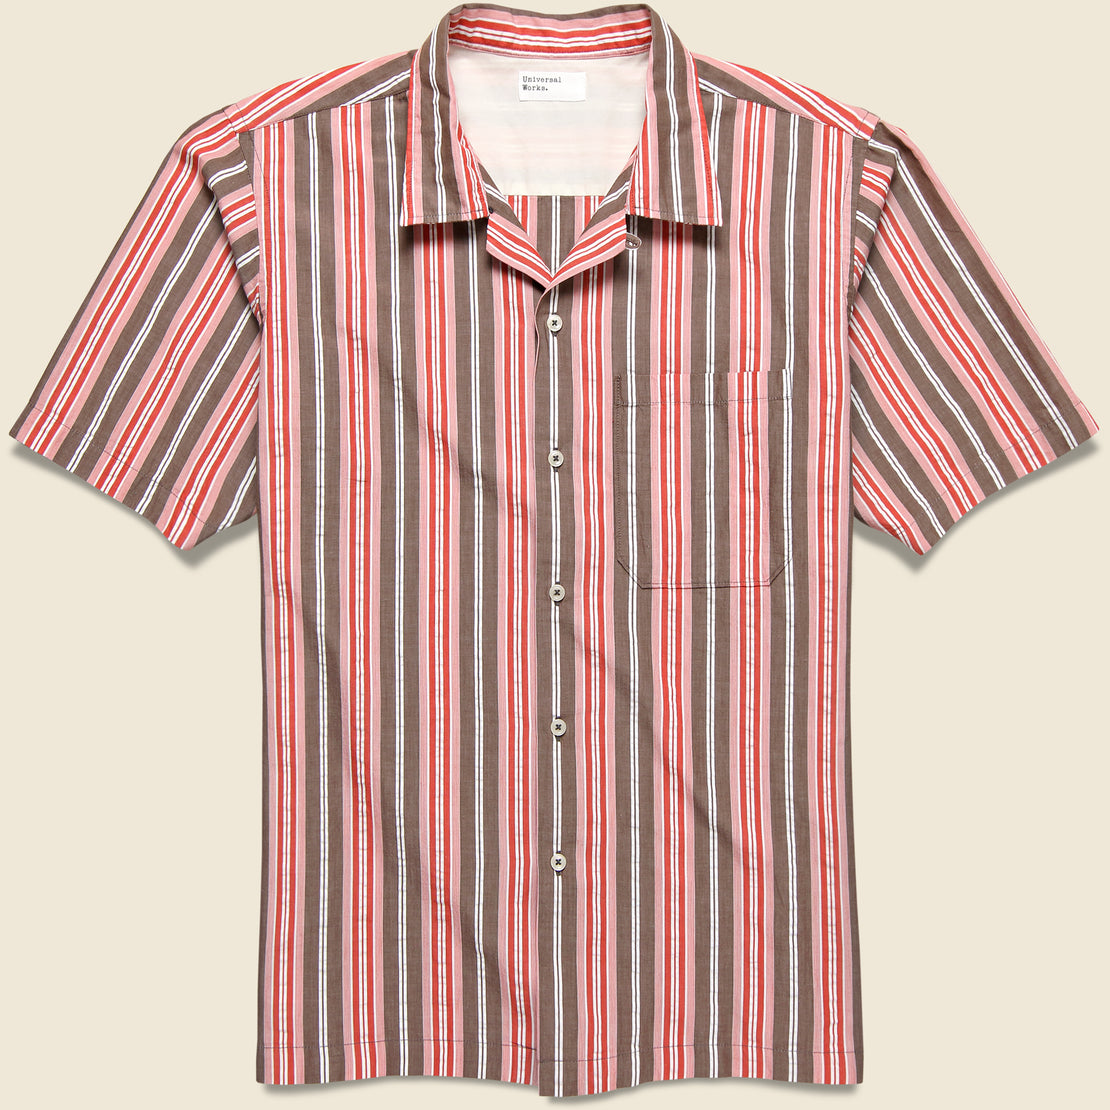 Universal Works Nassau Stripe Camp Shirt - Red/Brown